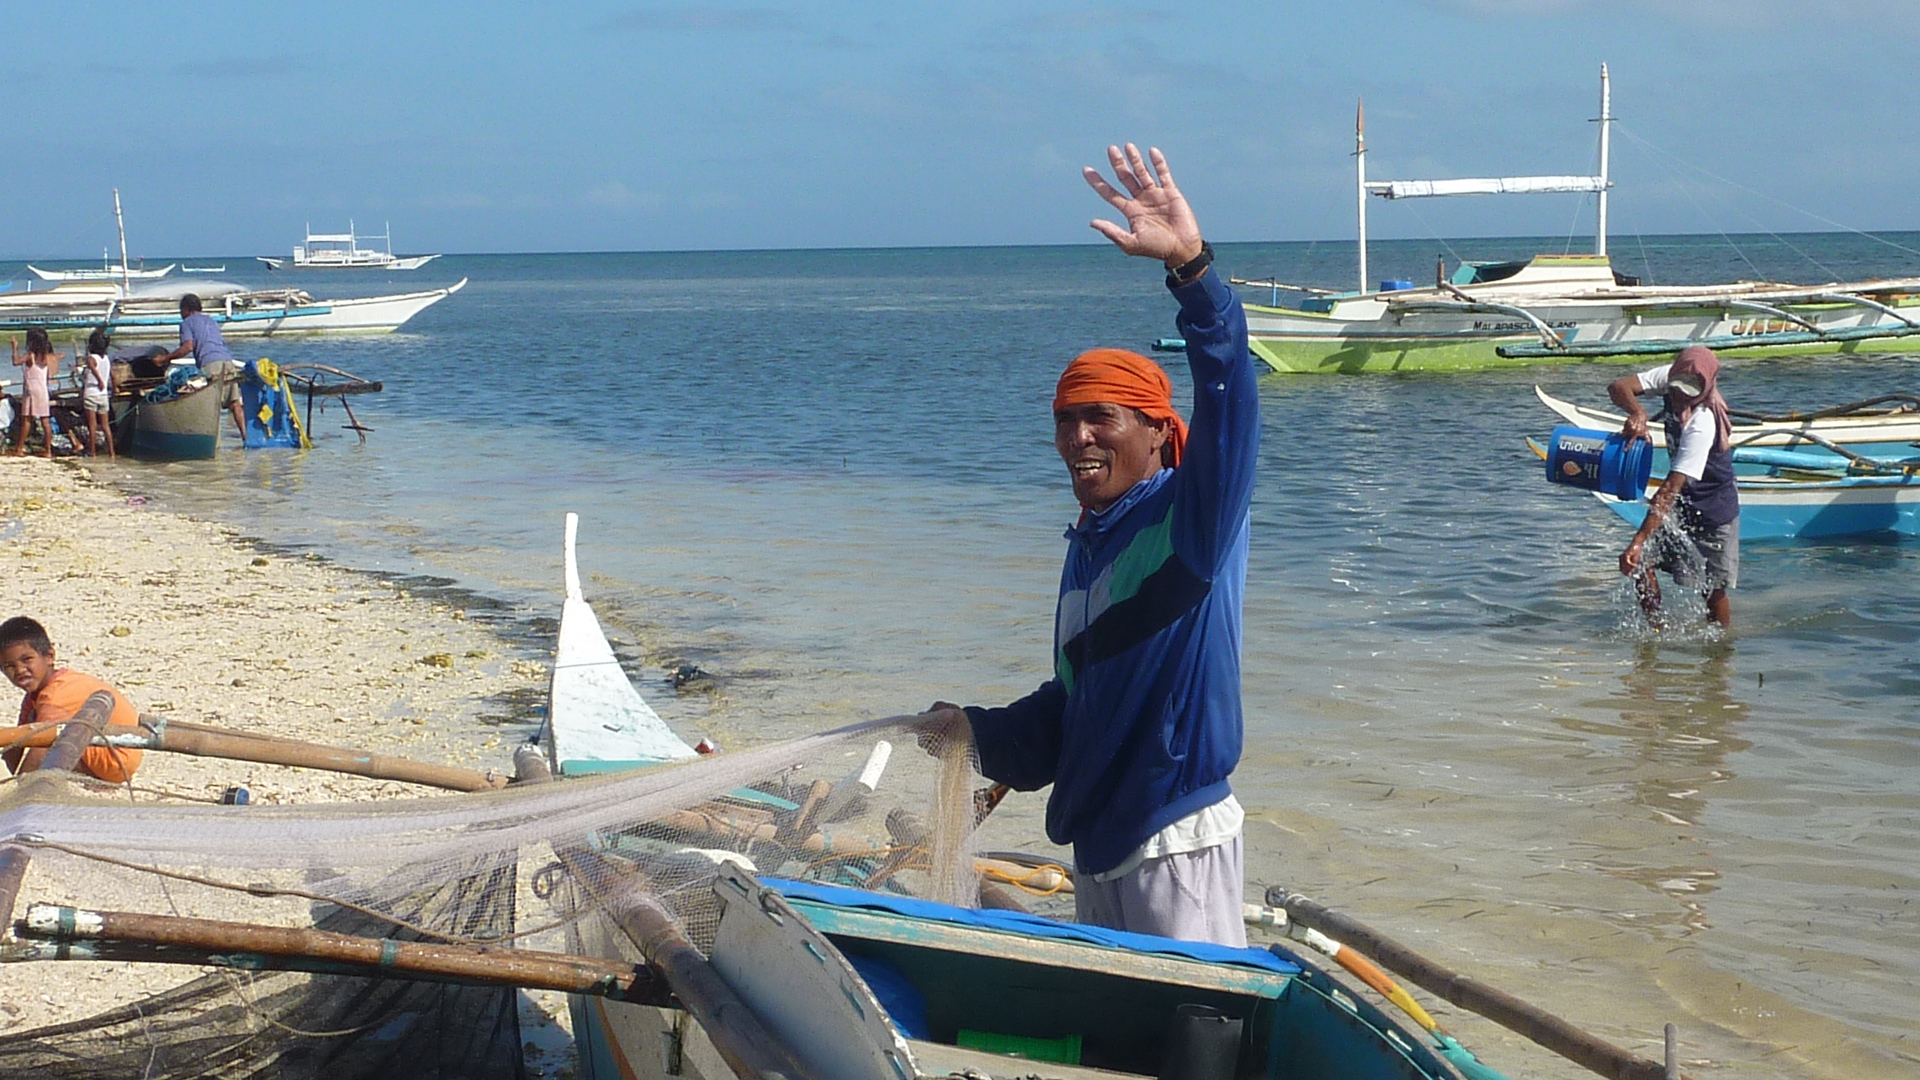 Malapascua Island, Cebu. Fisherman smiling cause good catch